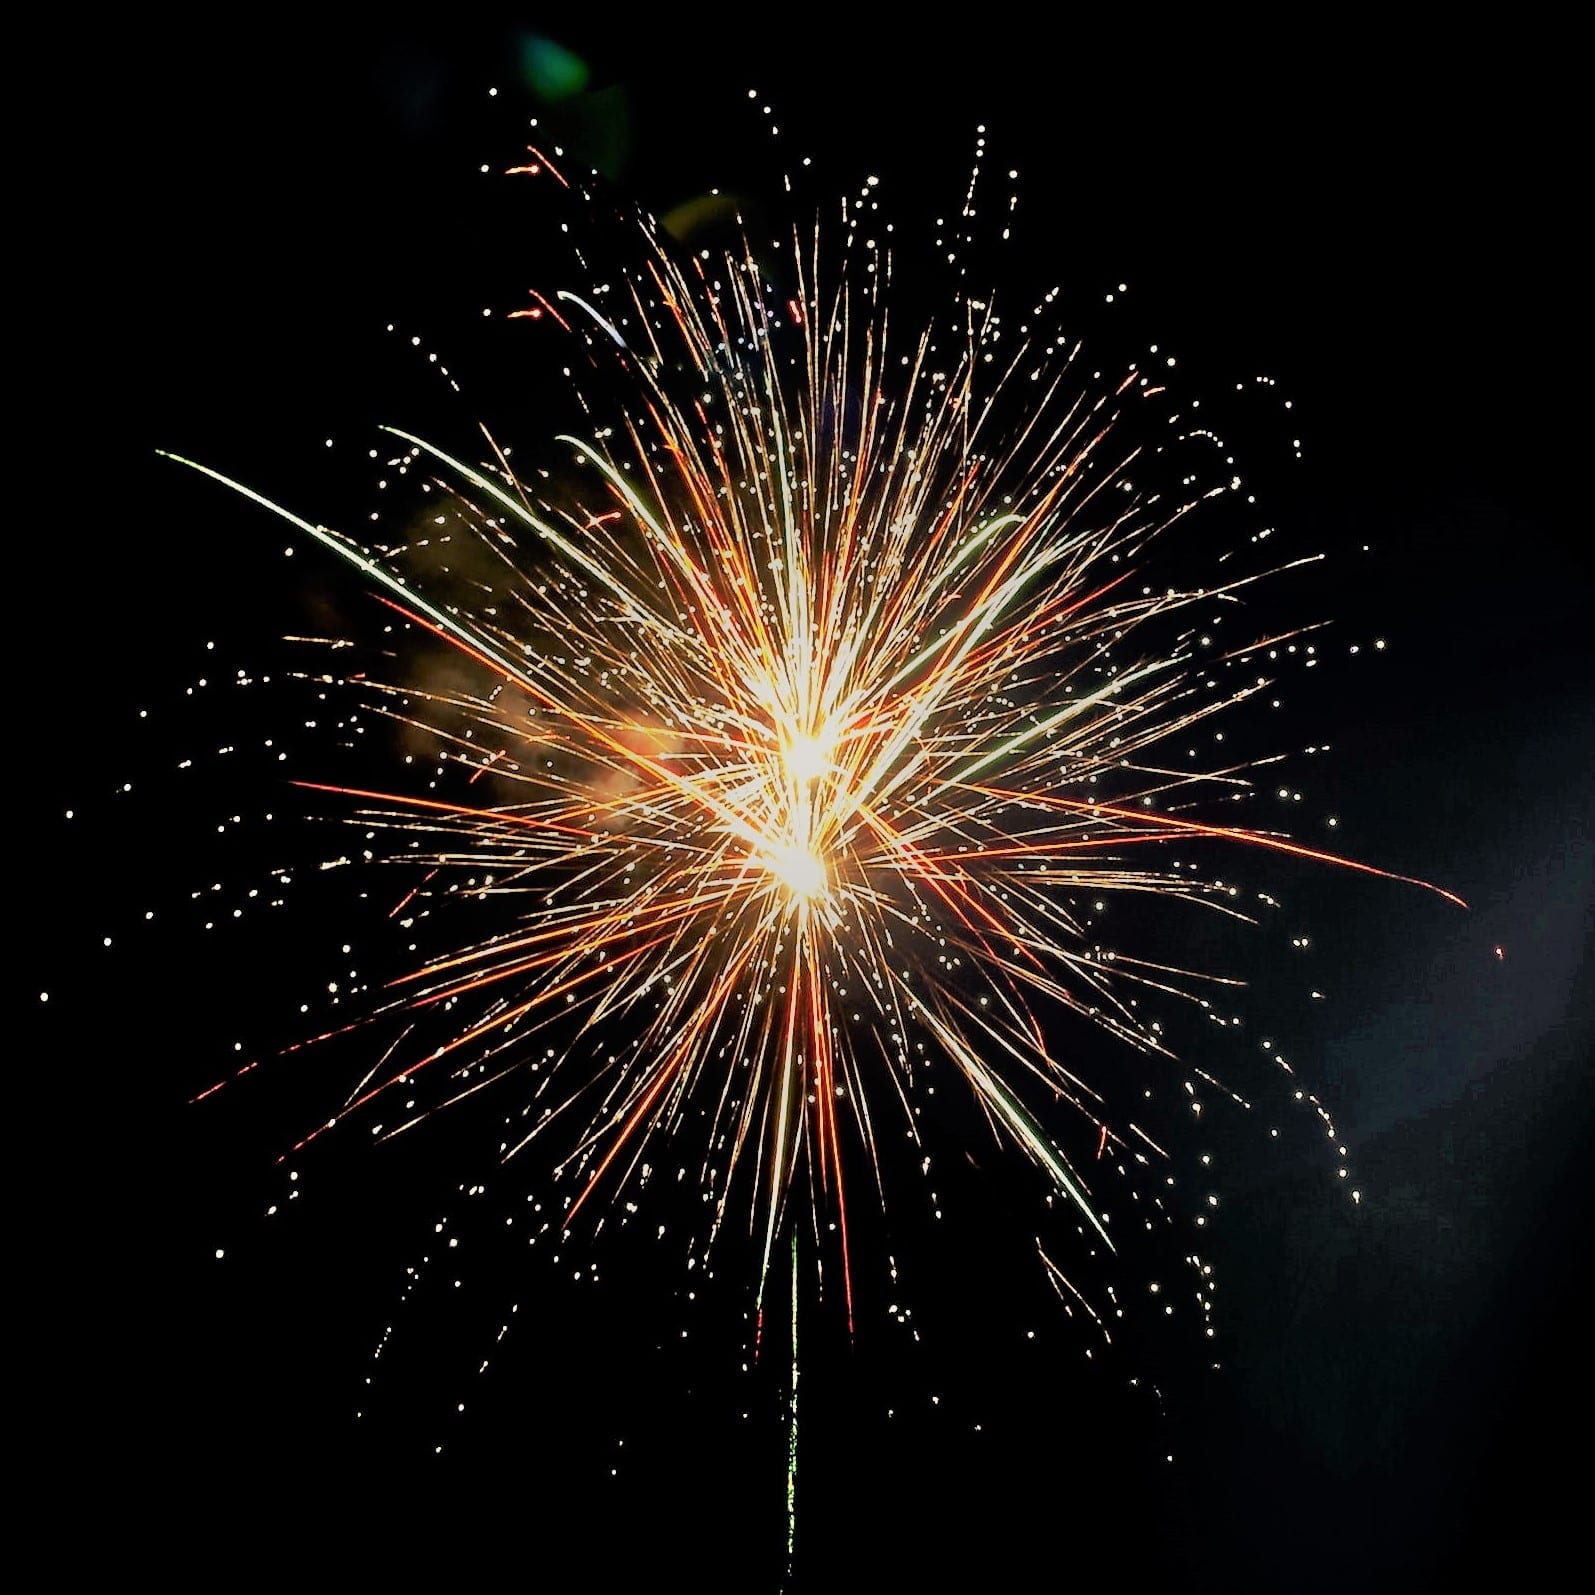 A firework lighting up the sky